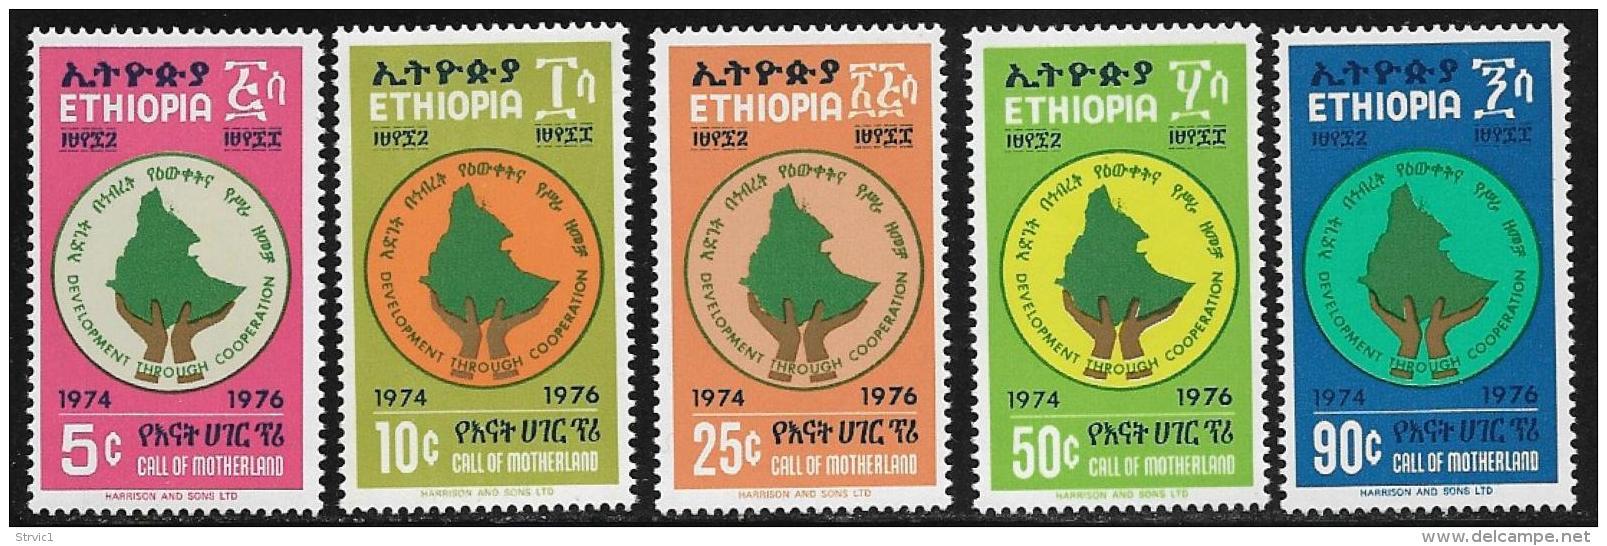 Ethiopia, Scott # 779-83 MNH Development Through Cooperation , 1976 - Ethiopia